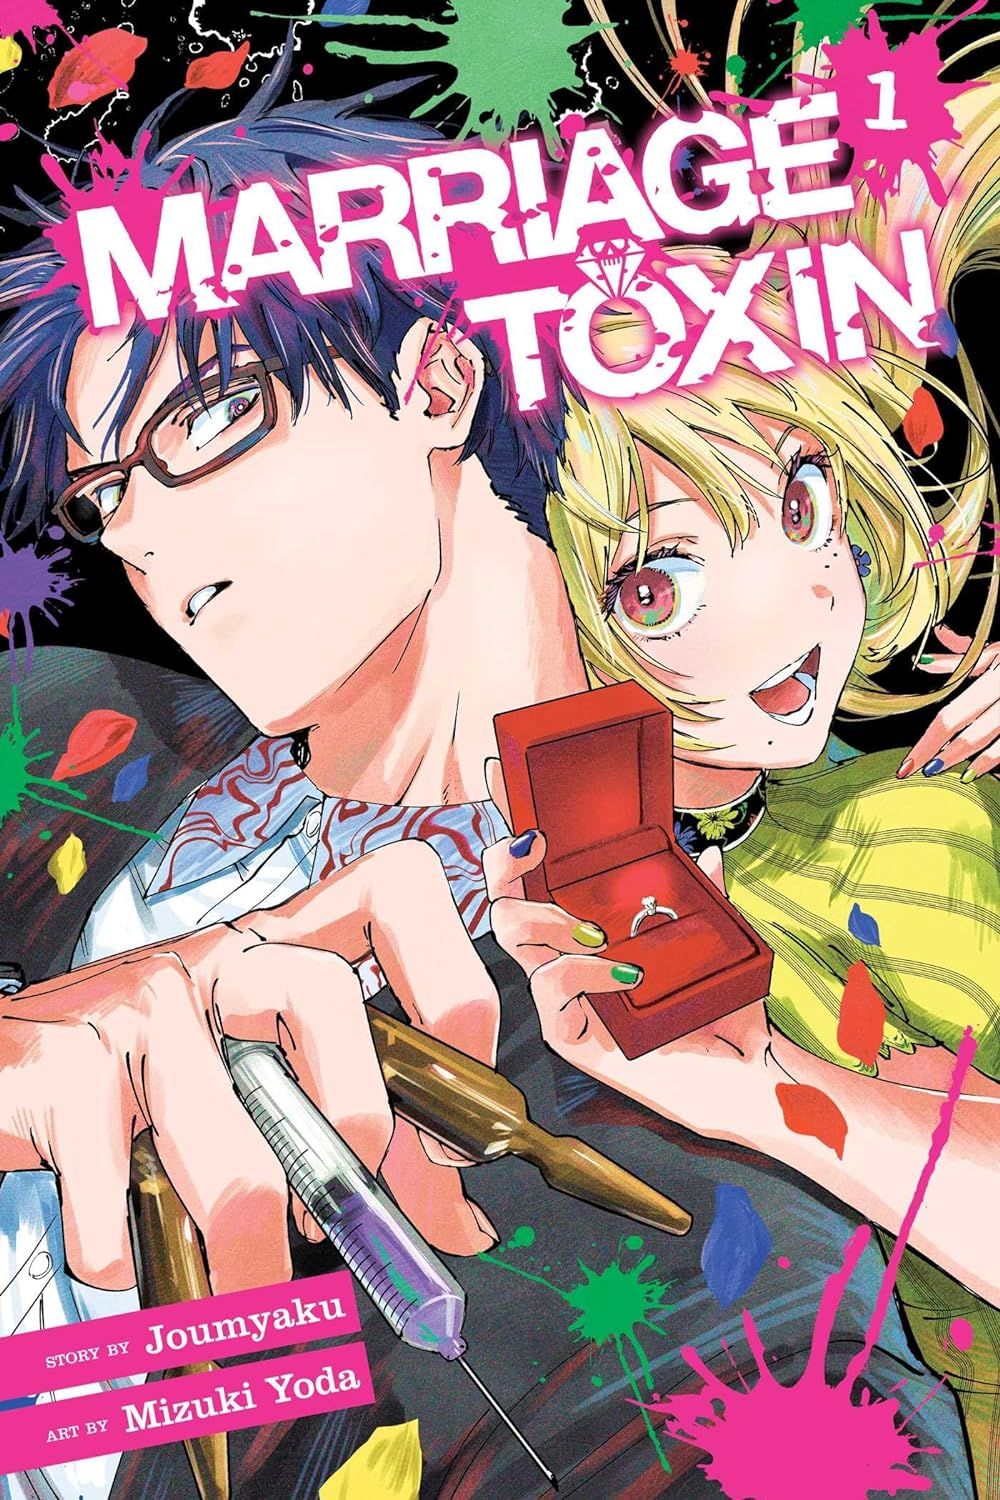 Marriage Toxin by Joumayku and Mizuki Yoda cover